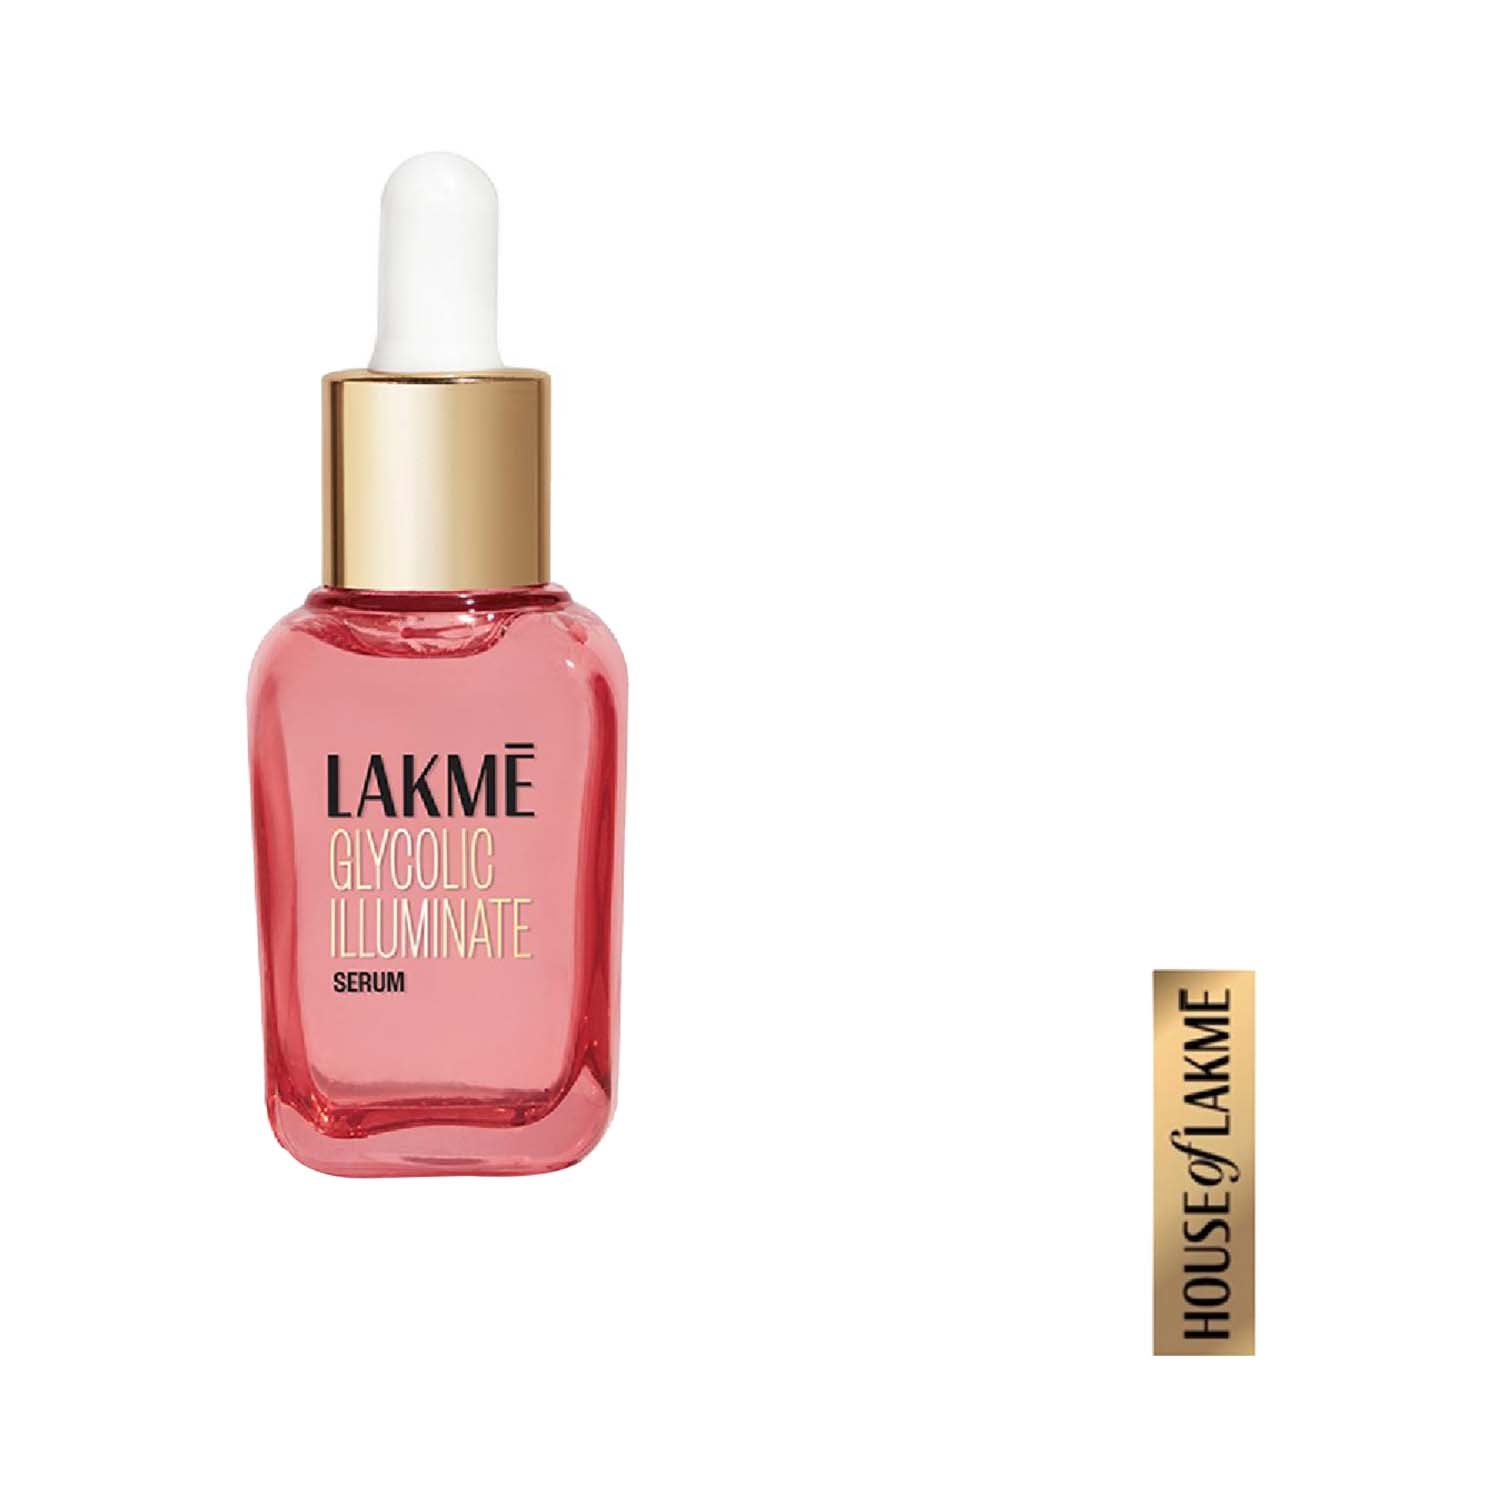 Lakme | Lakme Illuminate Serum With 1% Glycolic Acid Reduces Dullness & Improves Texture (30ml)